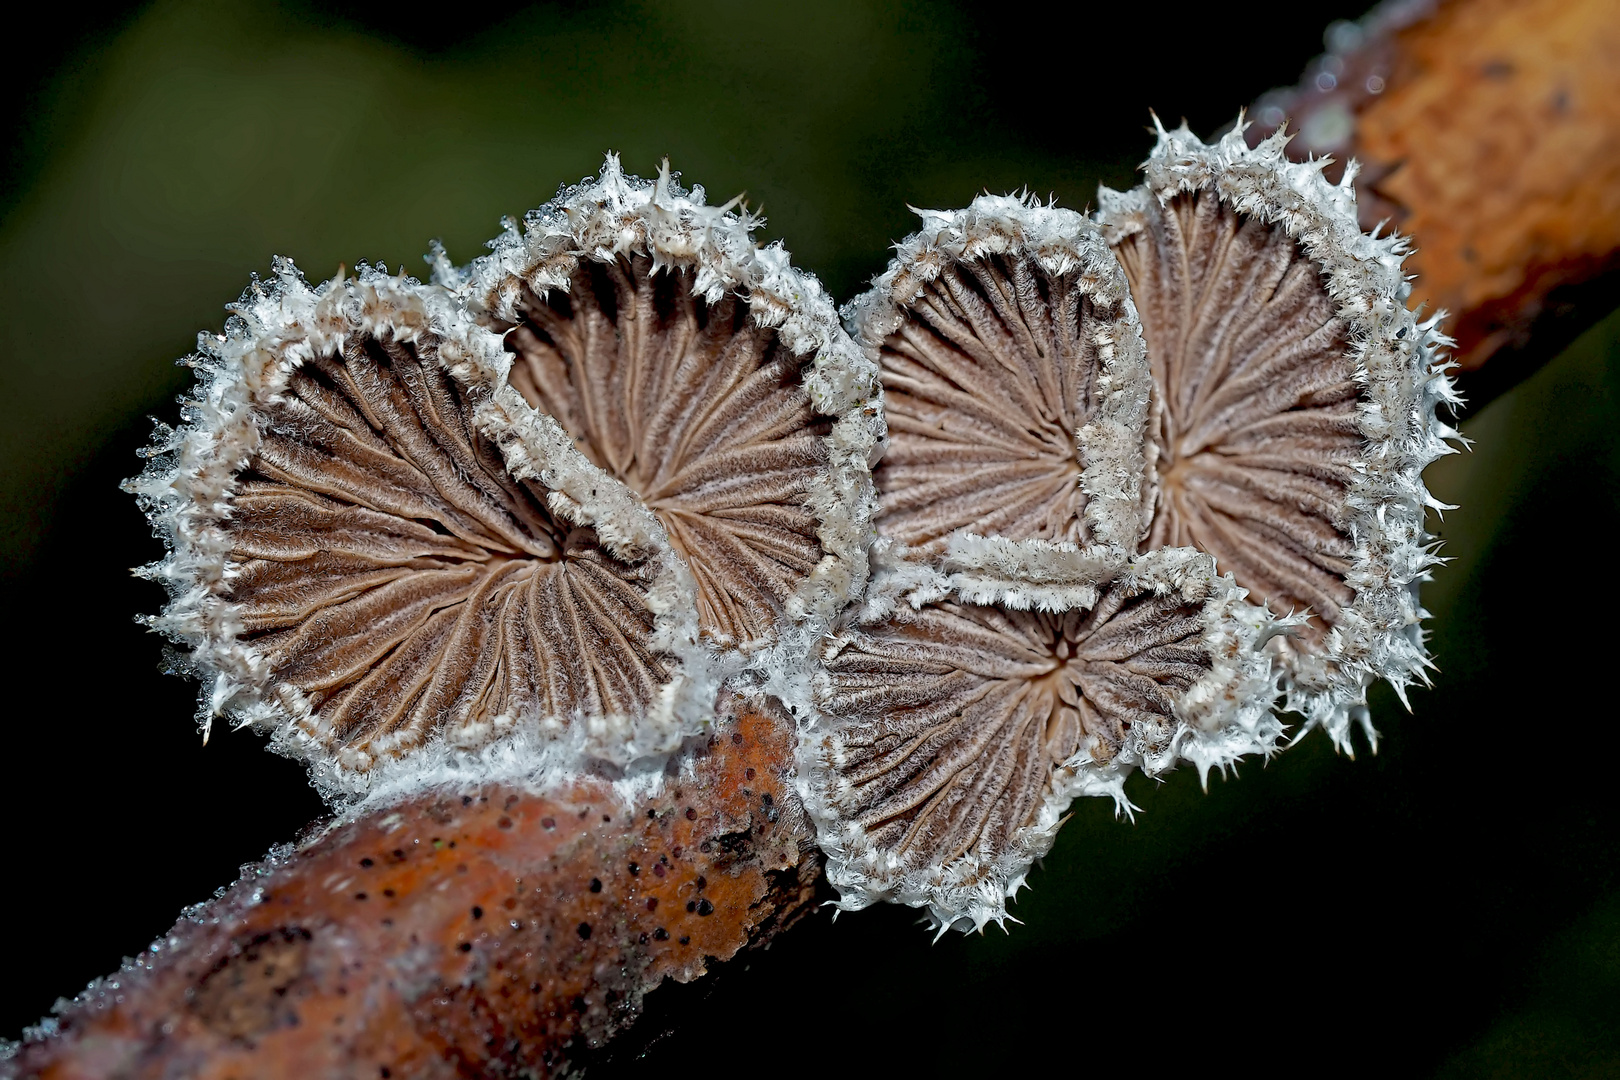  Spaltblättlinge: Pilze im Winter! - Des champignons en plein hiver!